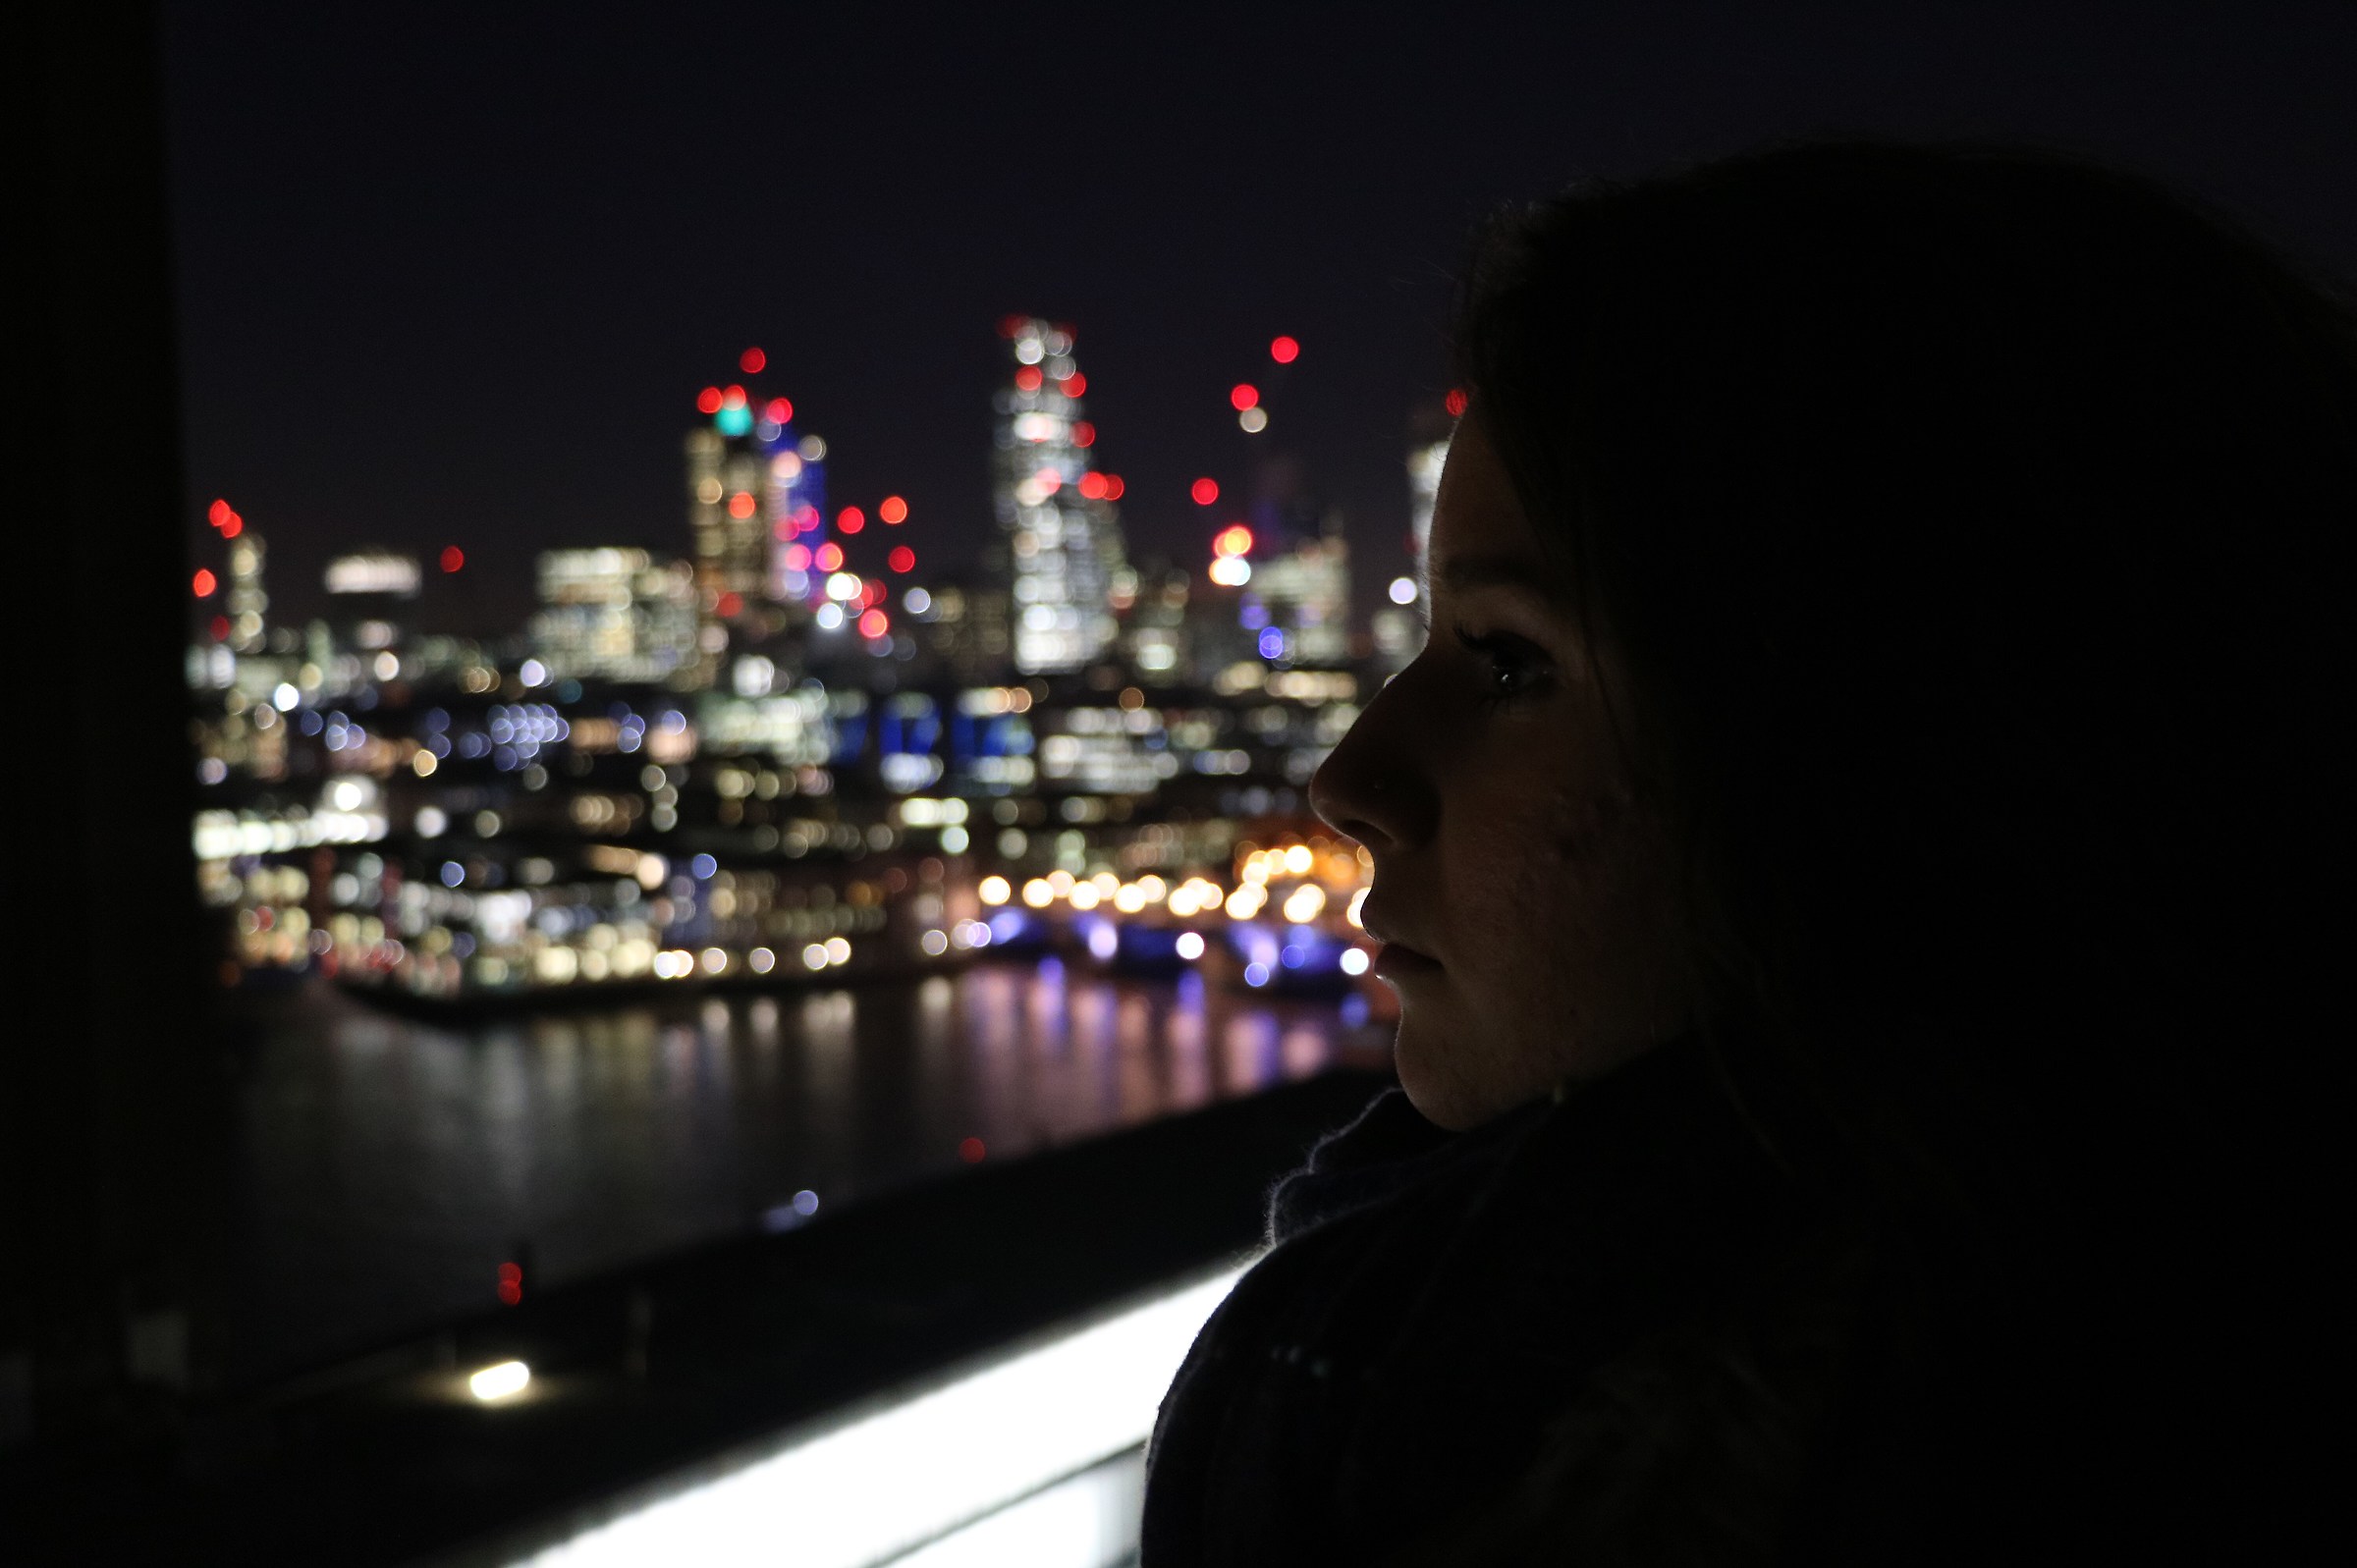 Night lights from Tate Modern - London...